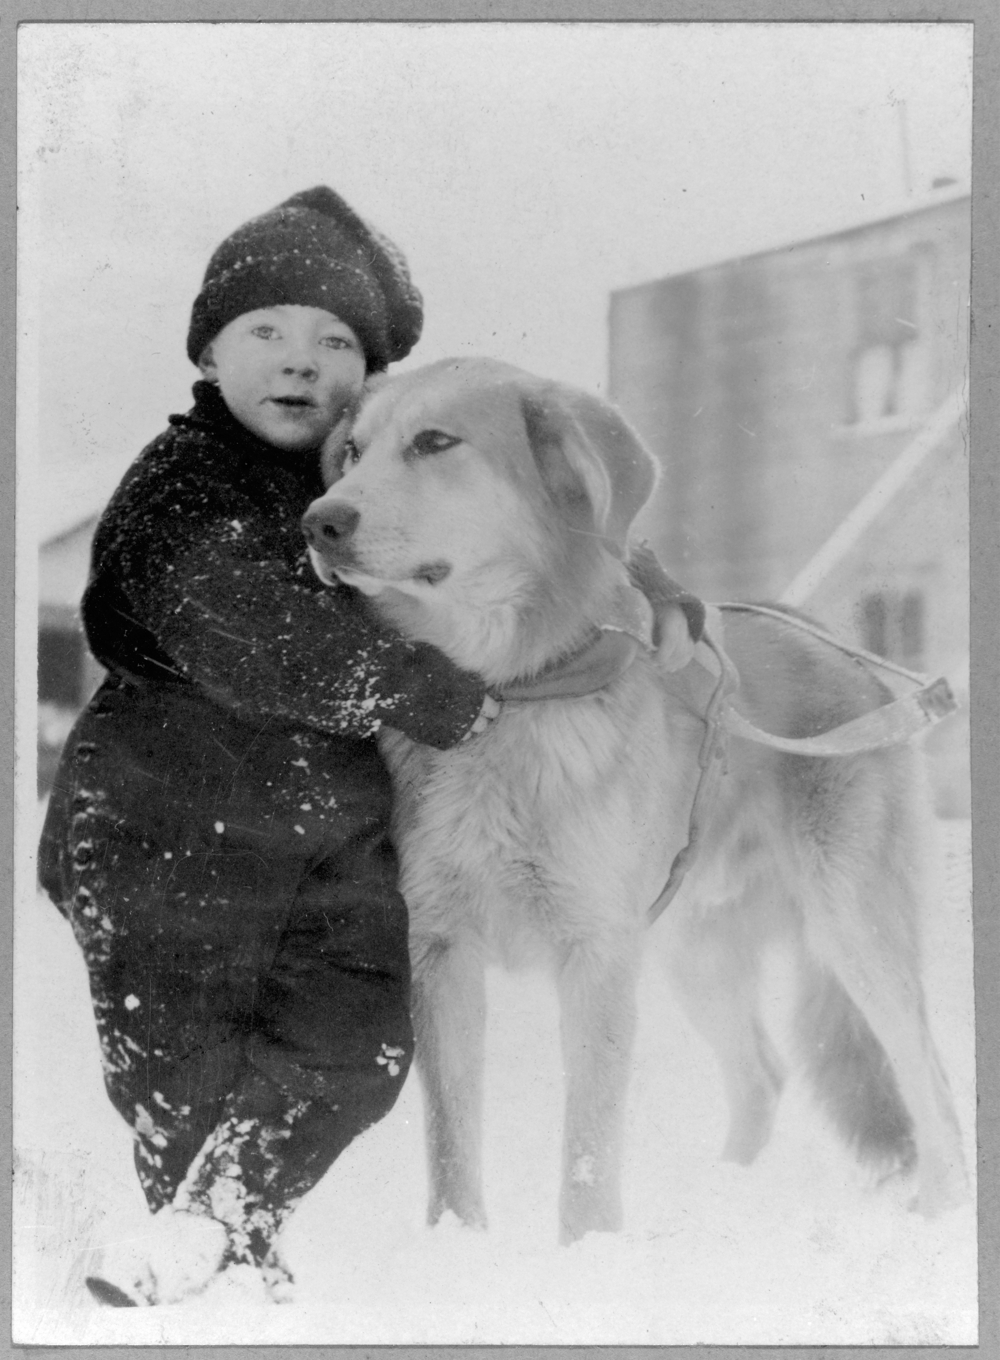 Child with dog